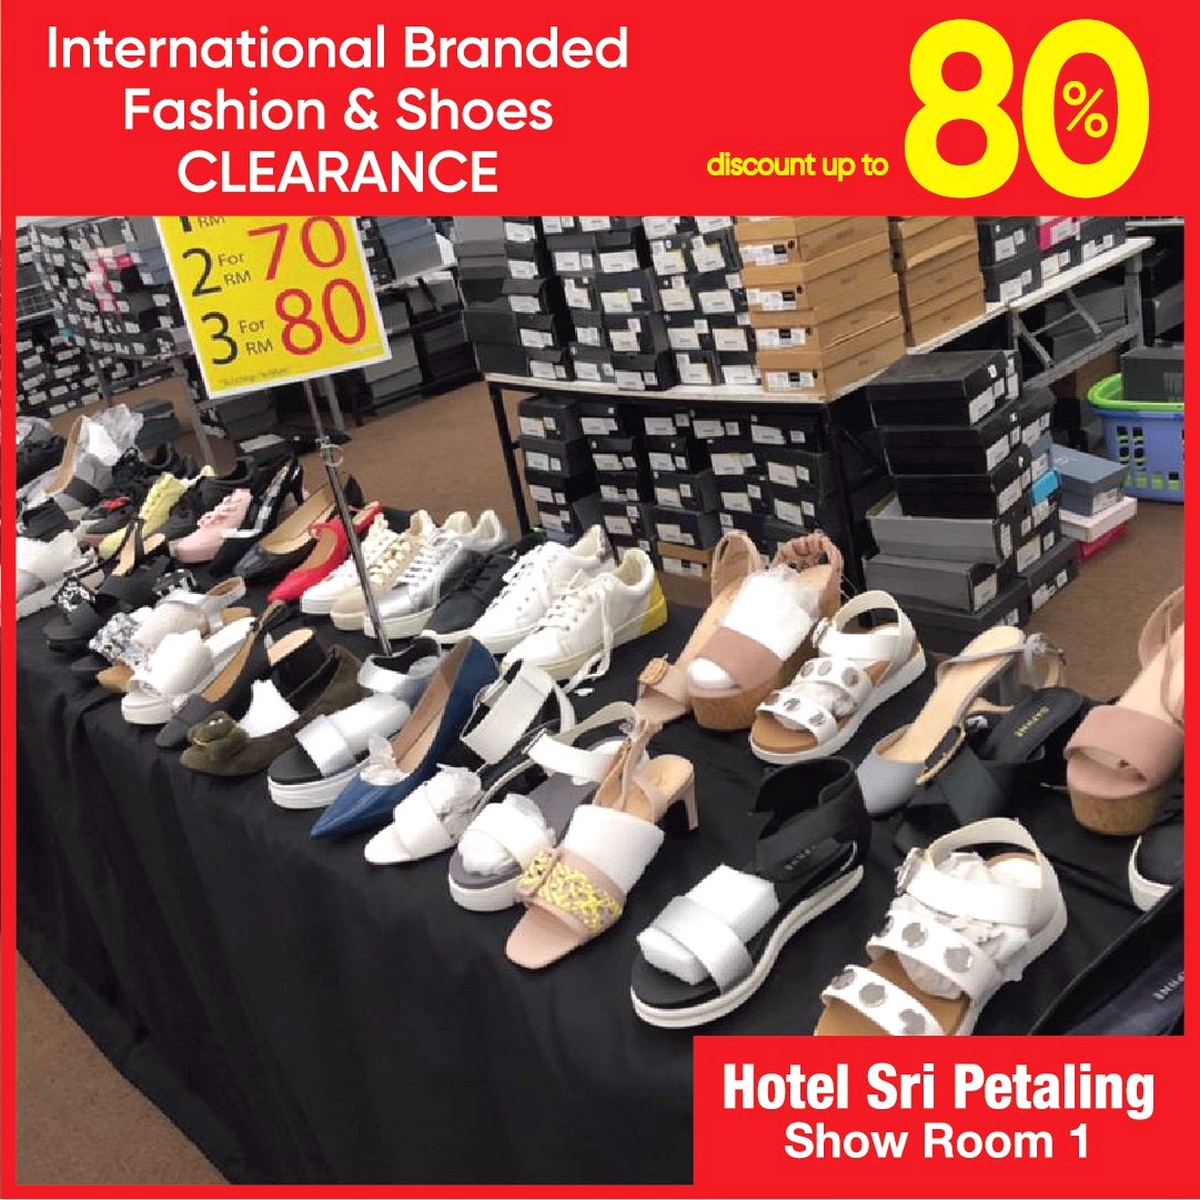 Hotel-Sri-Petaling-Warehouse-Sale-2021-7 - Apparels Fashion Accessories Fashion Lifestyle & Department Store Kuala Lumpur Selangor Warehouse Sale & Clearance in Malaysia 